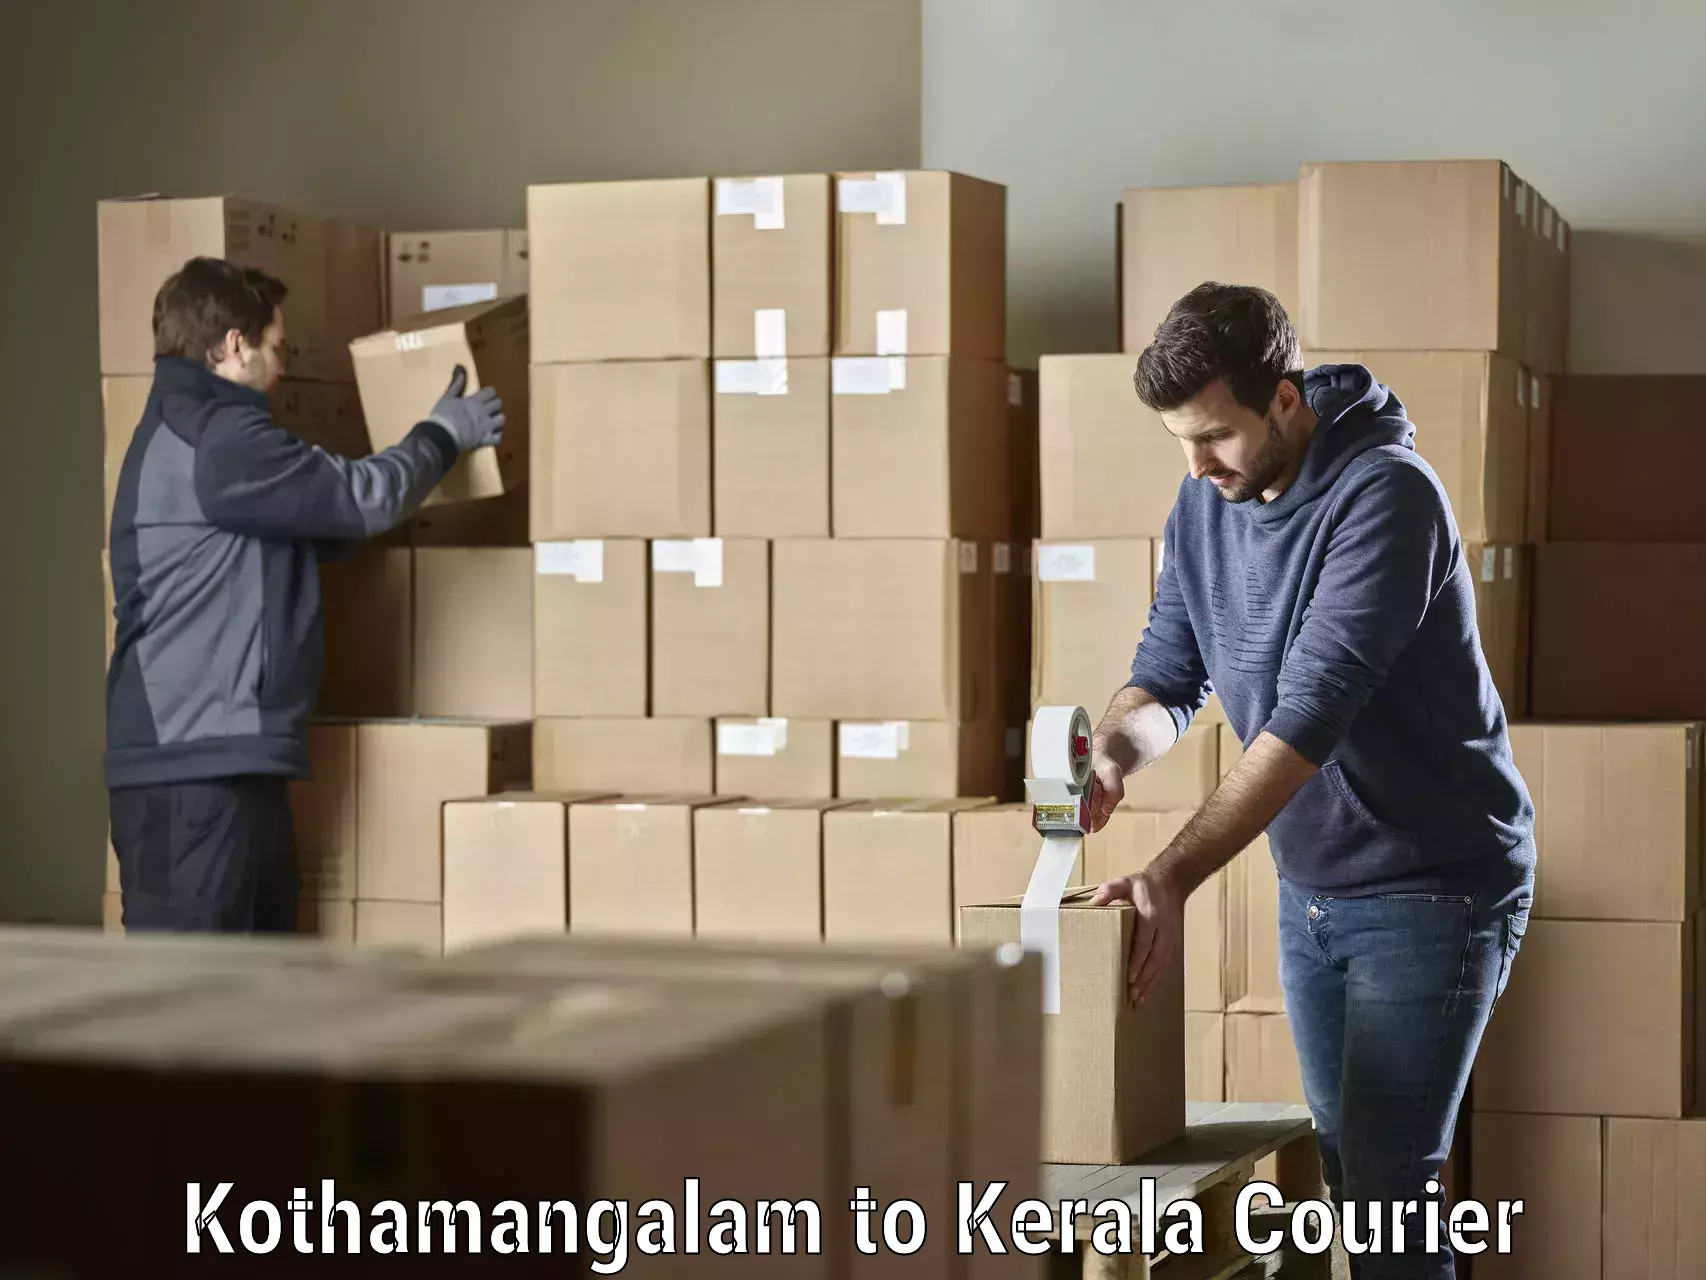 Courier service comparison Kothamangalam to Kottayam